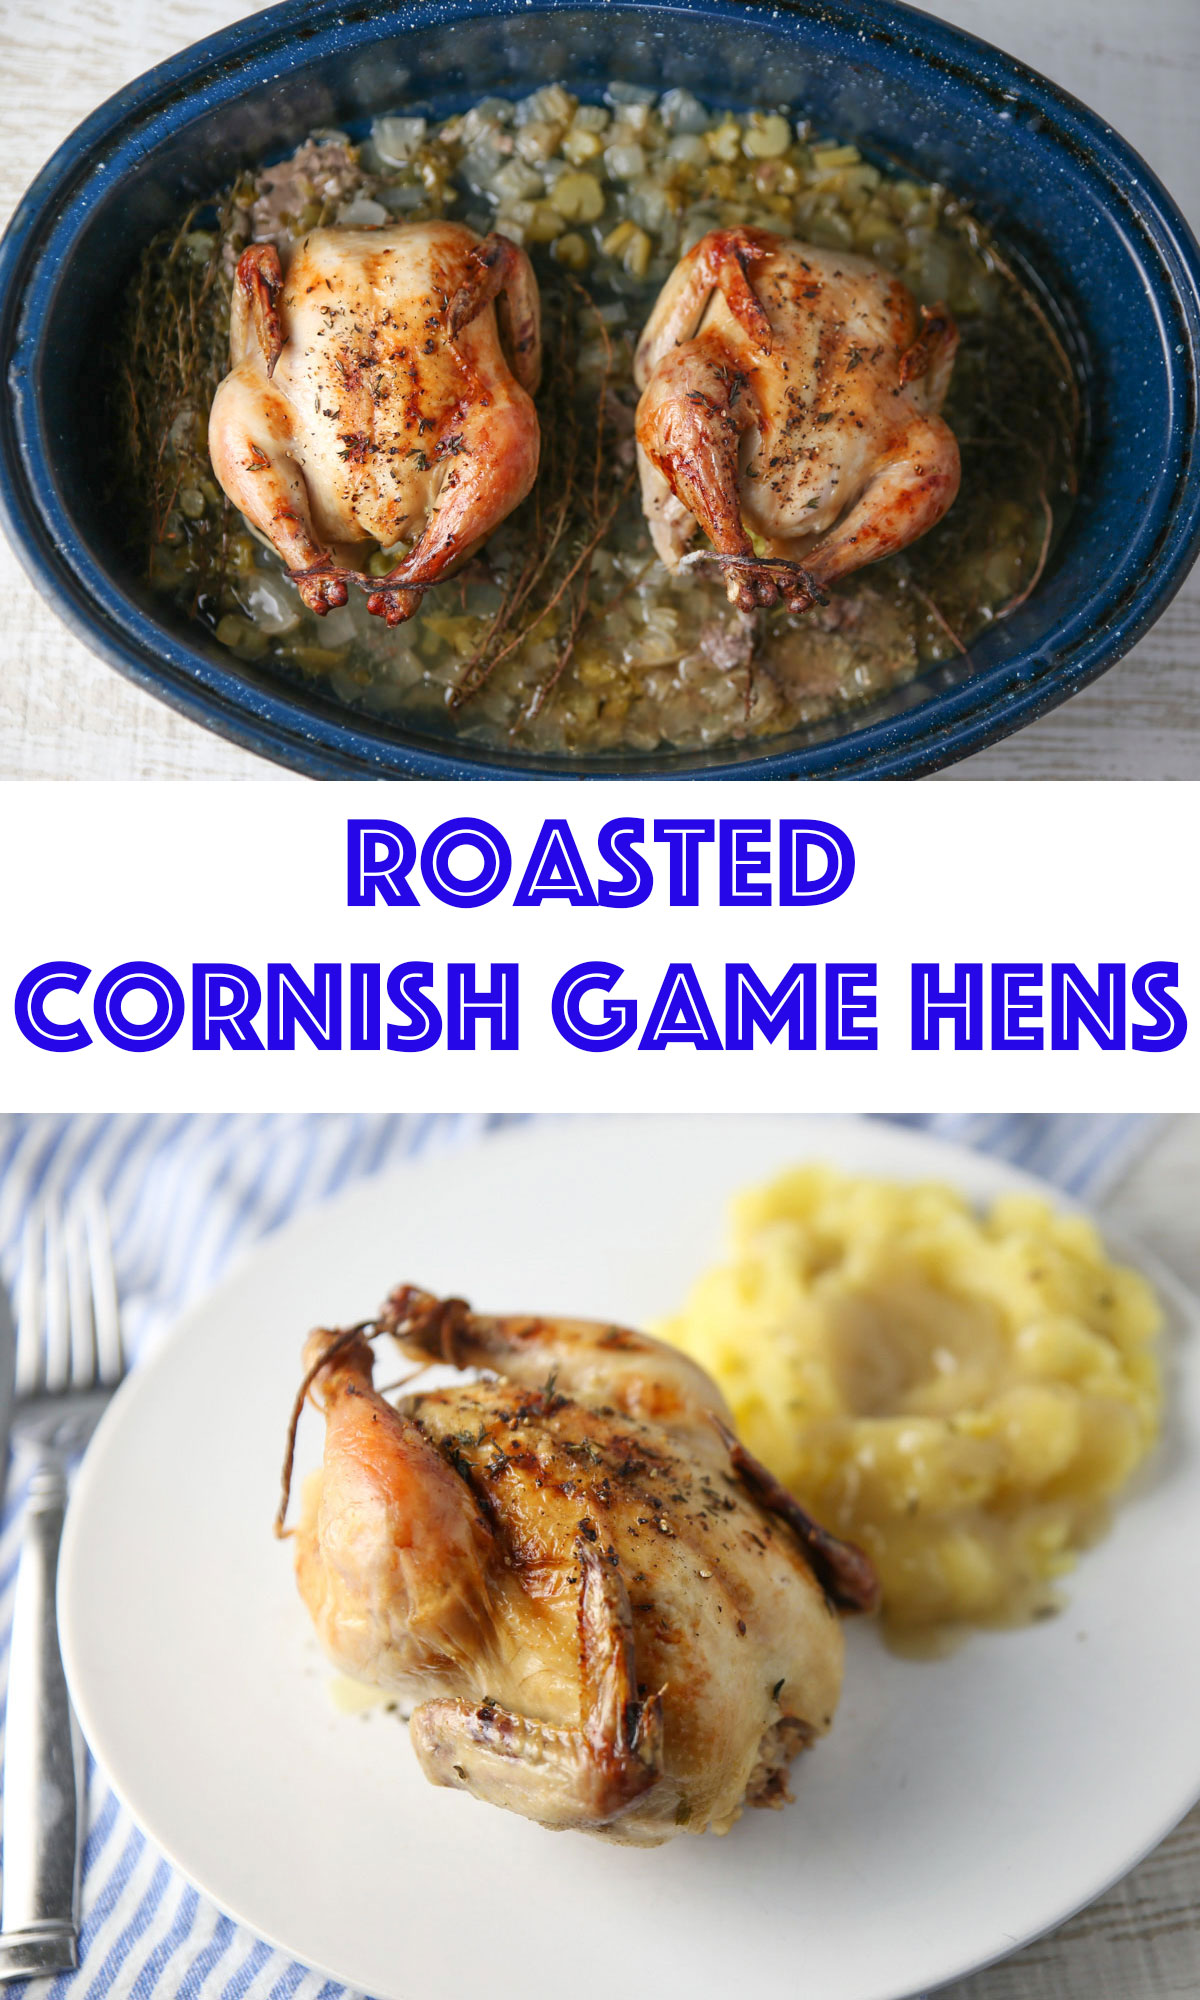 Roasted Cornish game hens